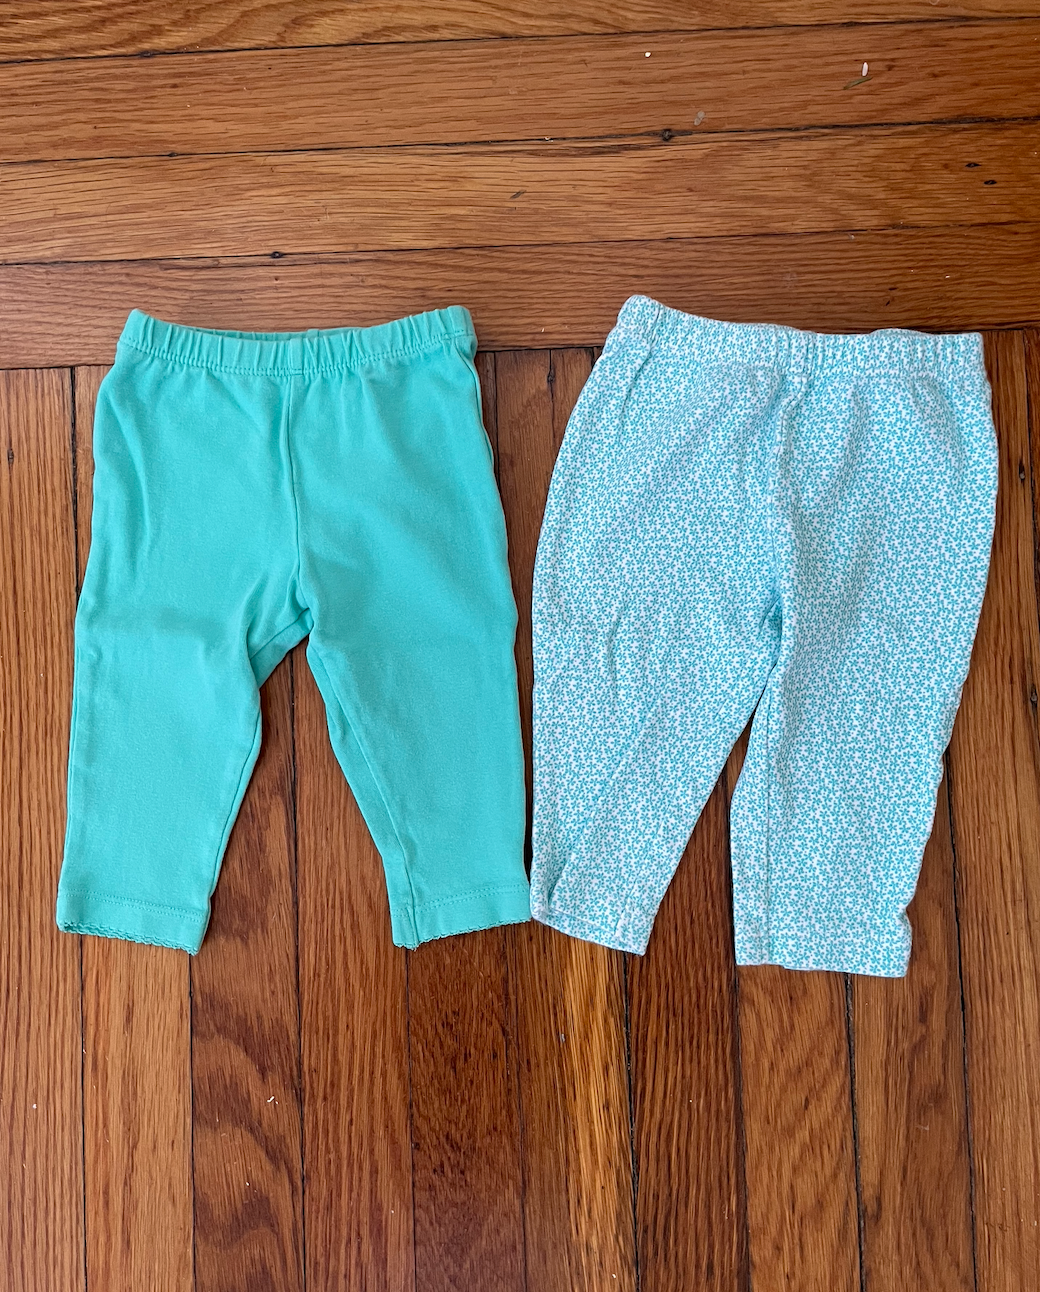 Carter's pants - set of 2 - teal - girls size 6 months